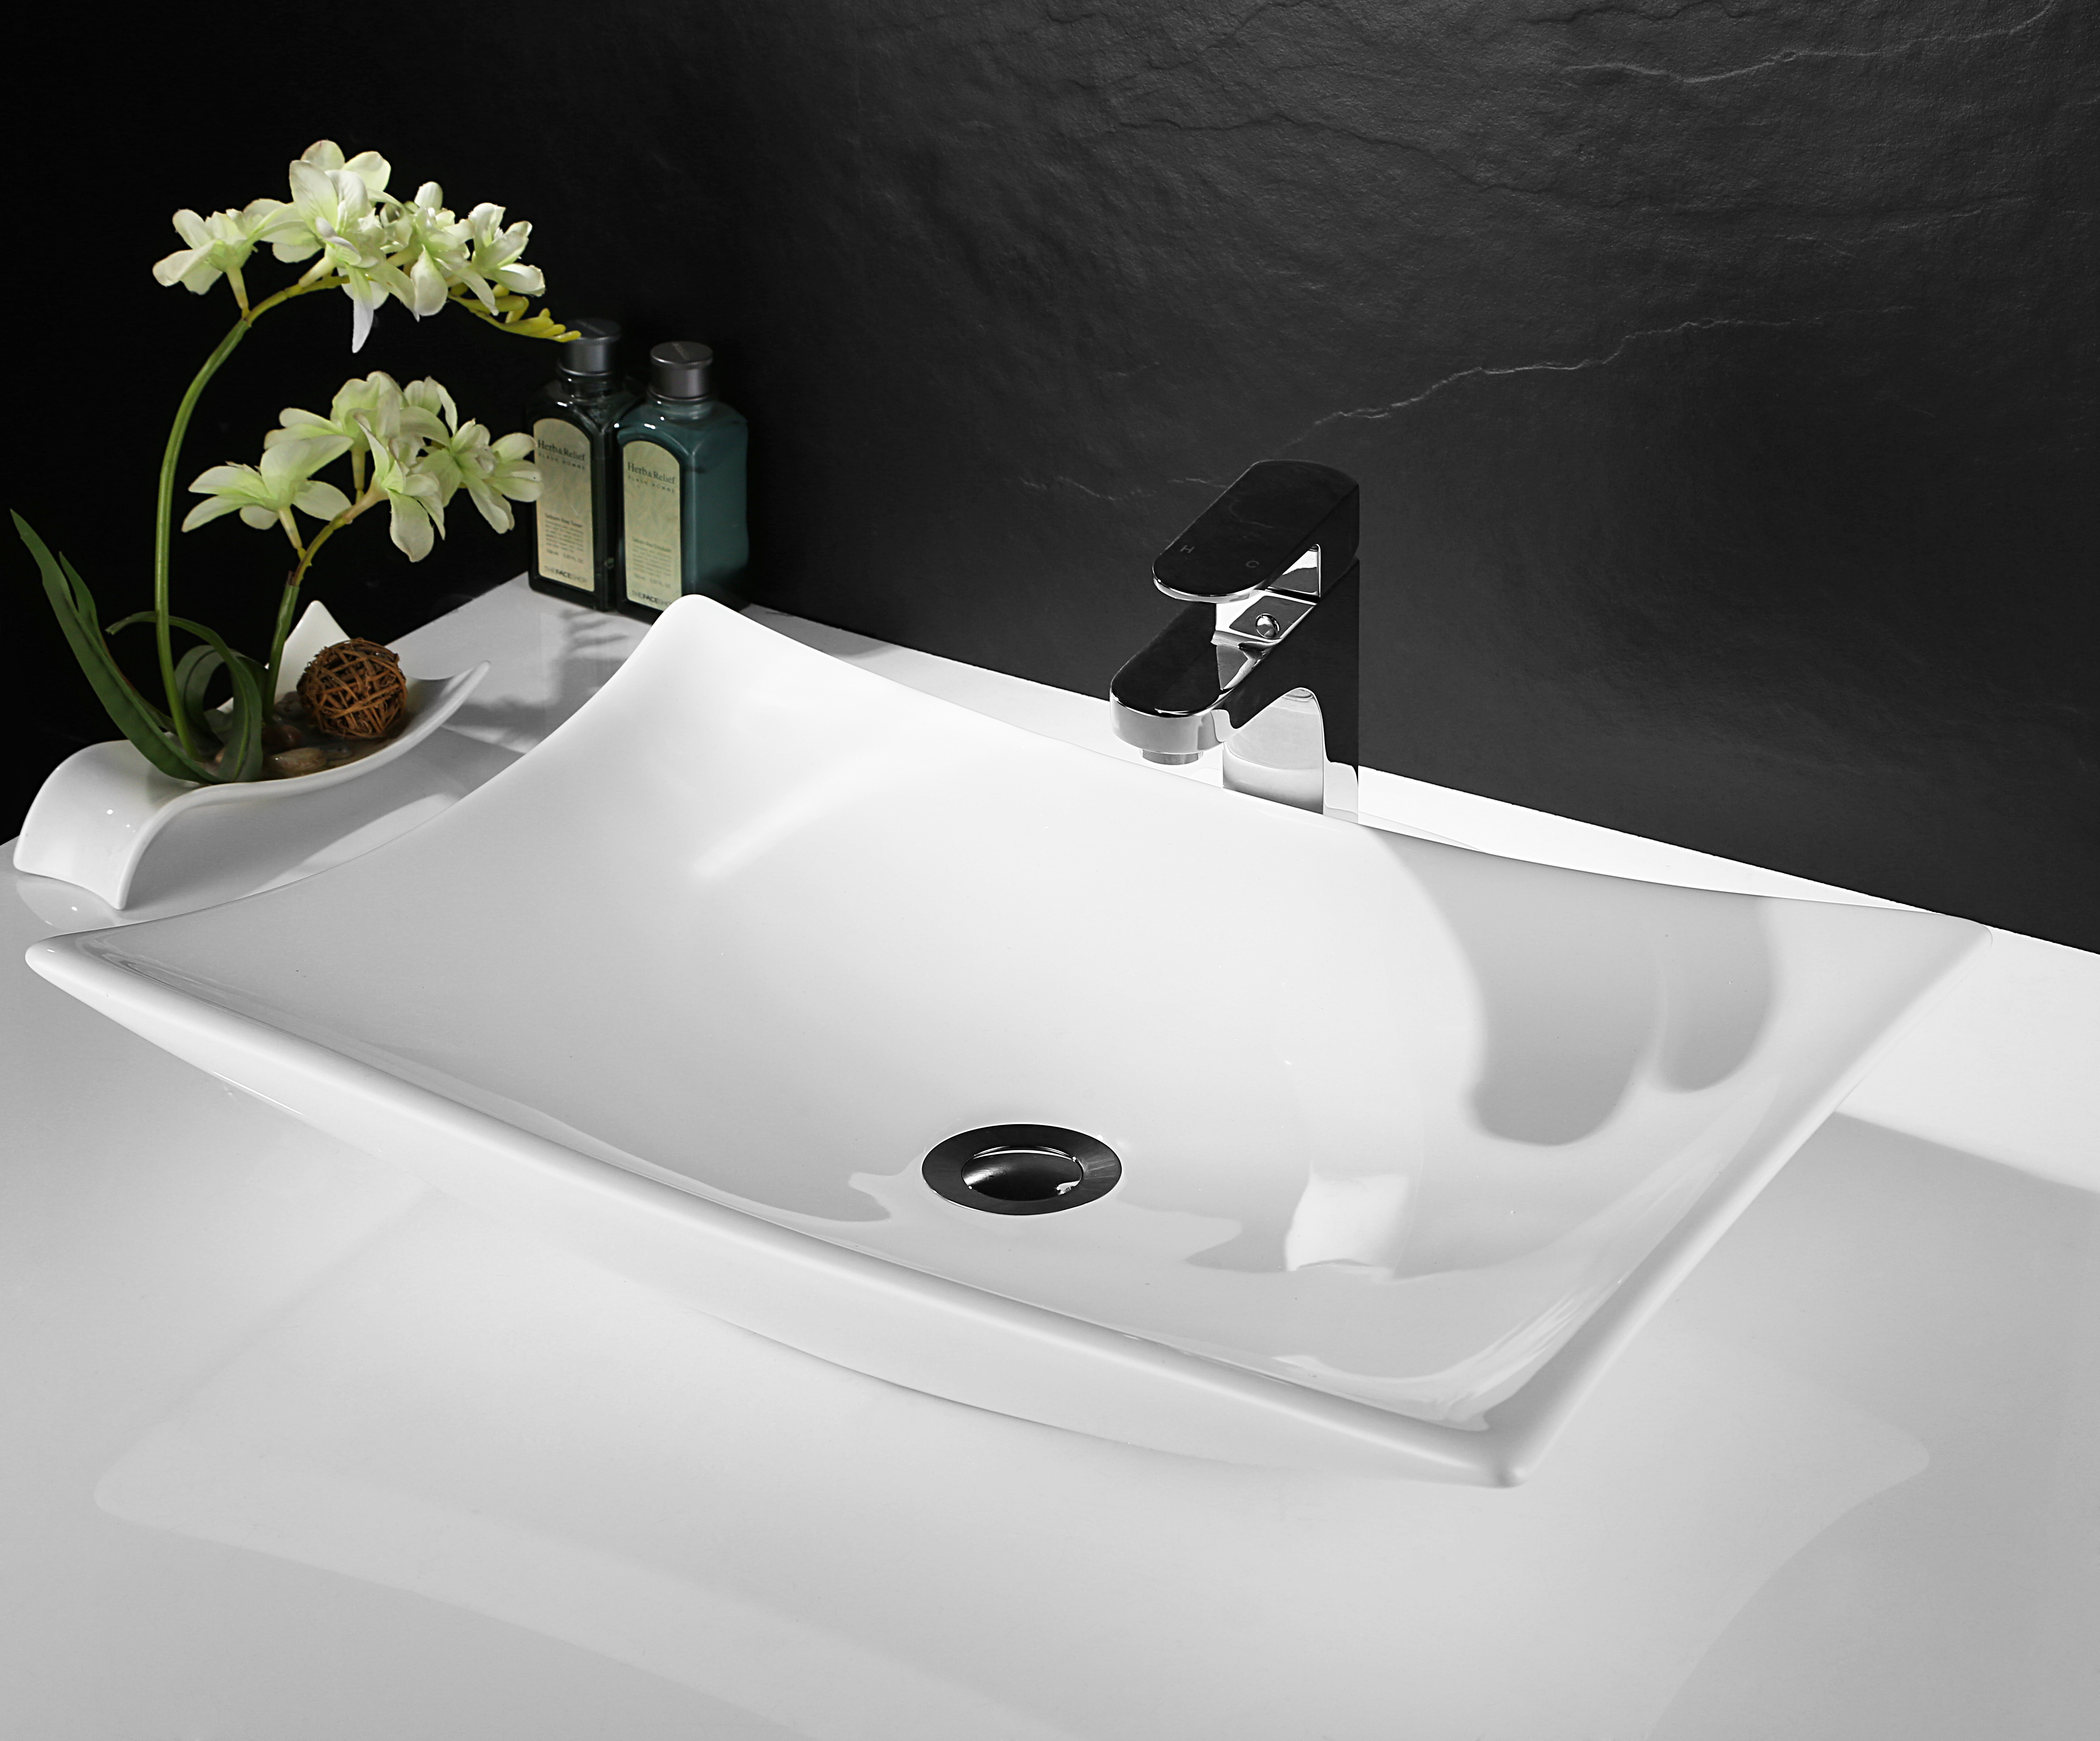 Basin Top Ceramic Wash Basin Bathroom Sink Bowl Gloss Above Counter Top Vanity